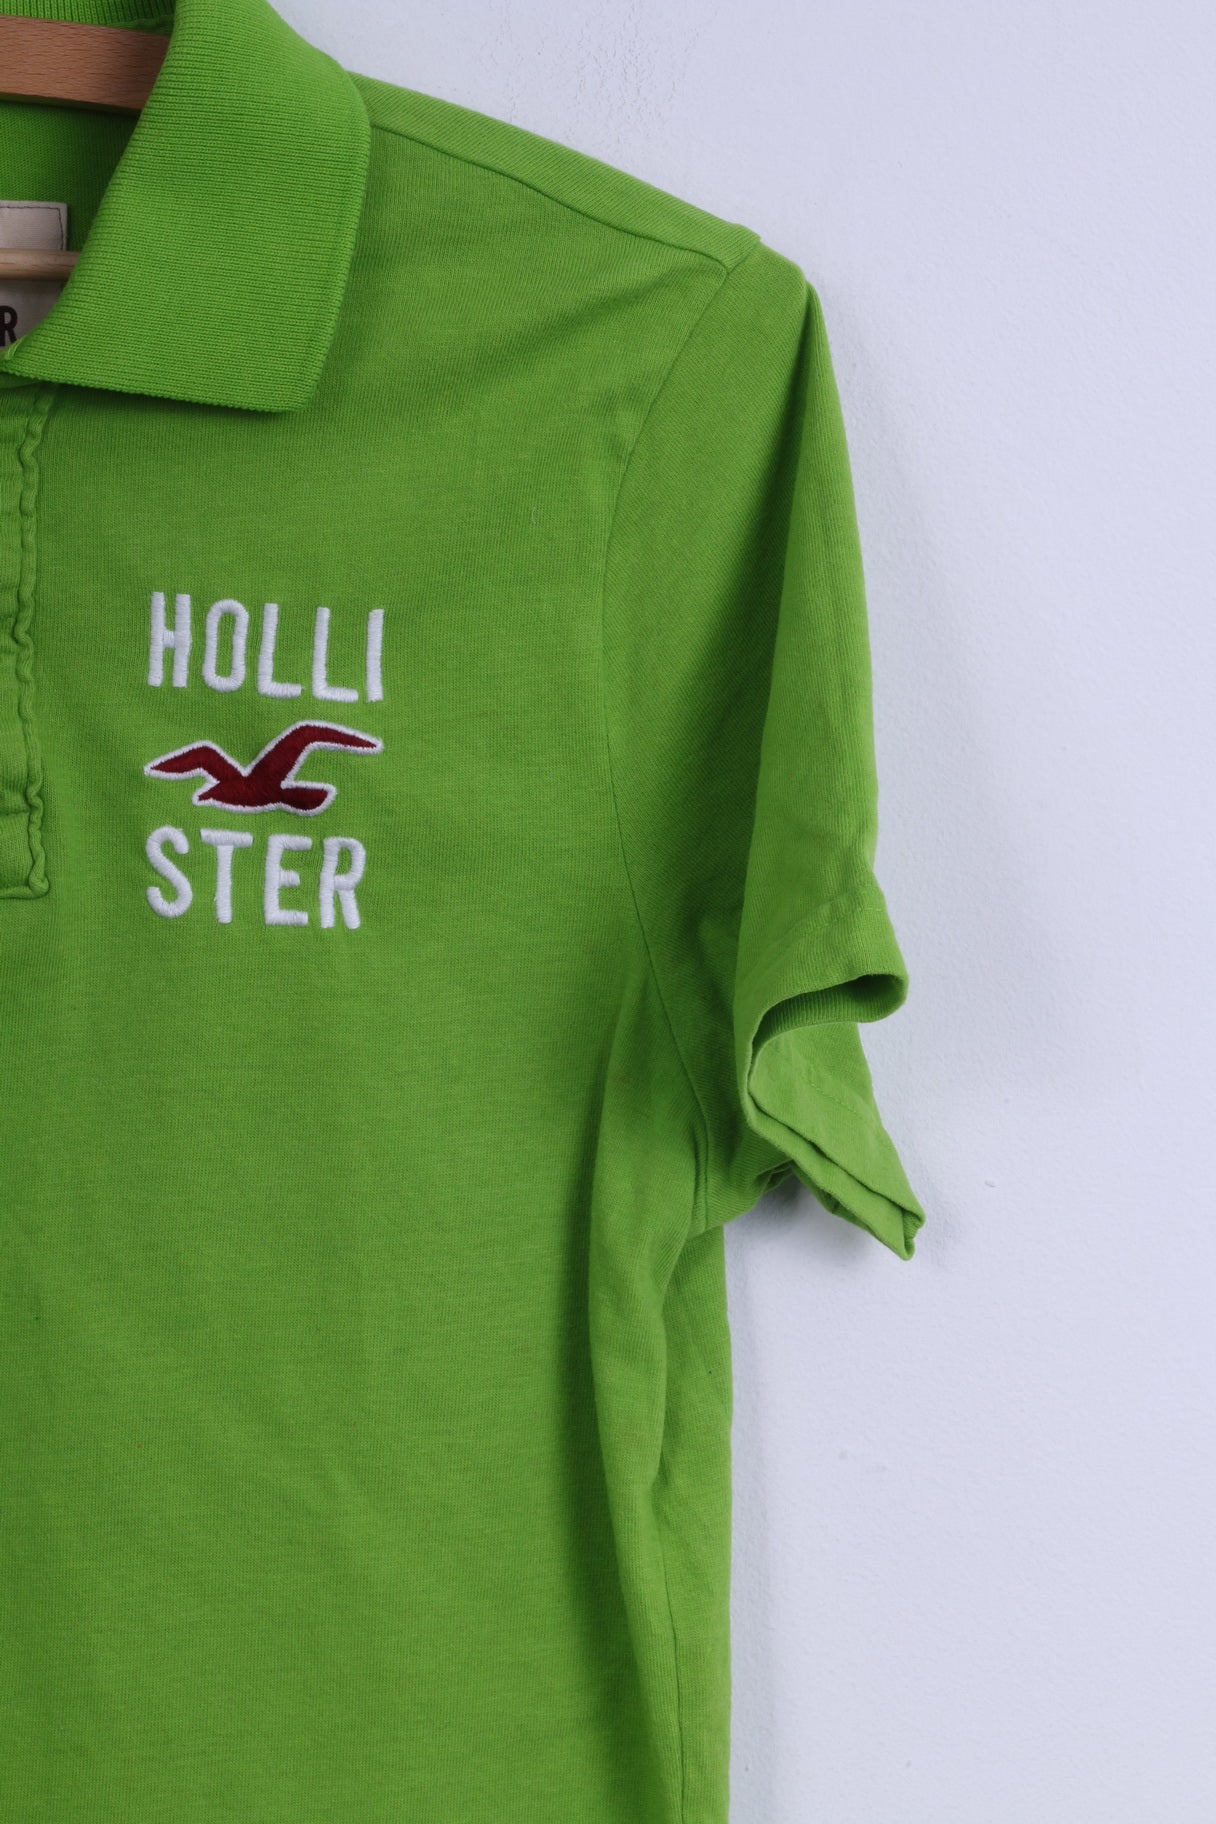 hollister polo shirts mens